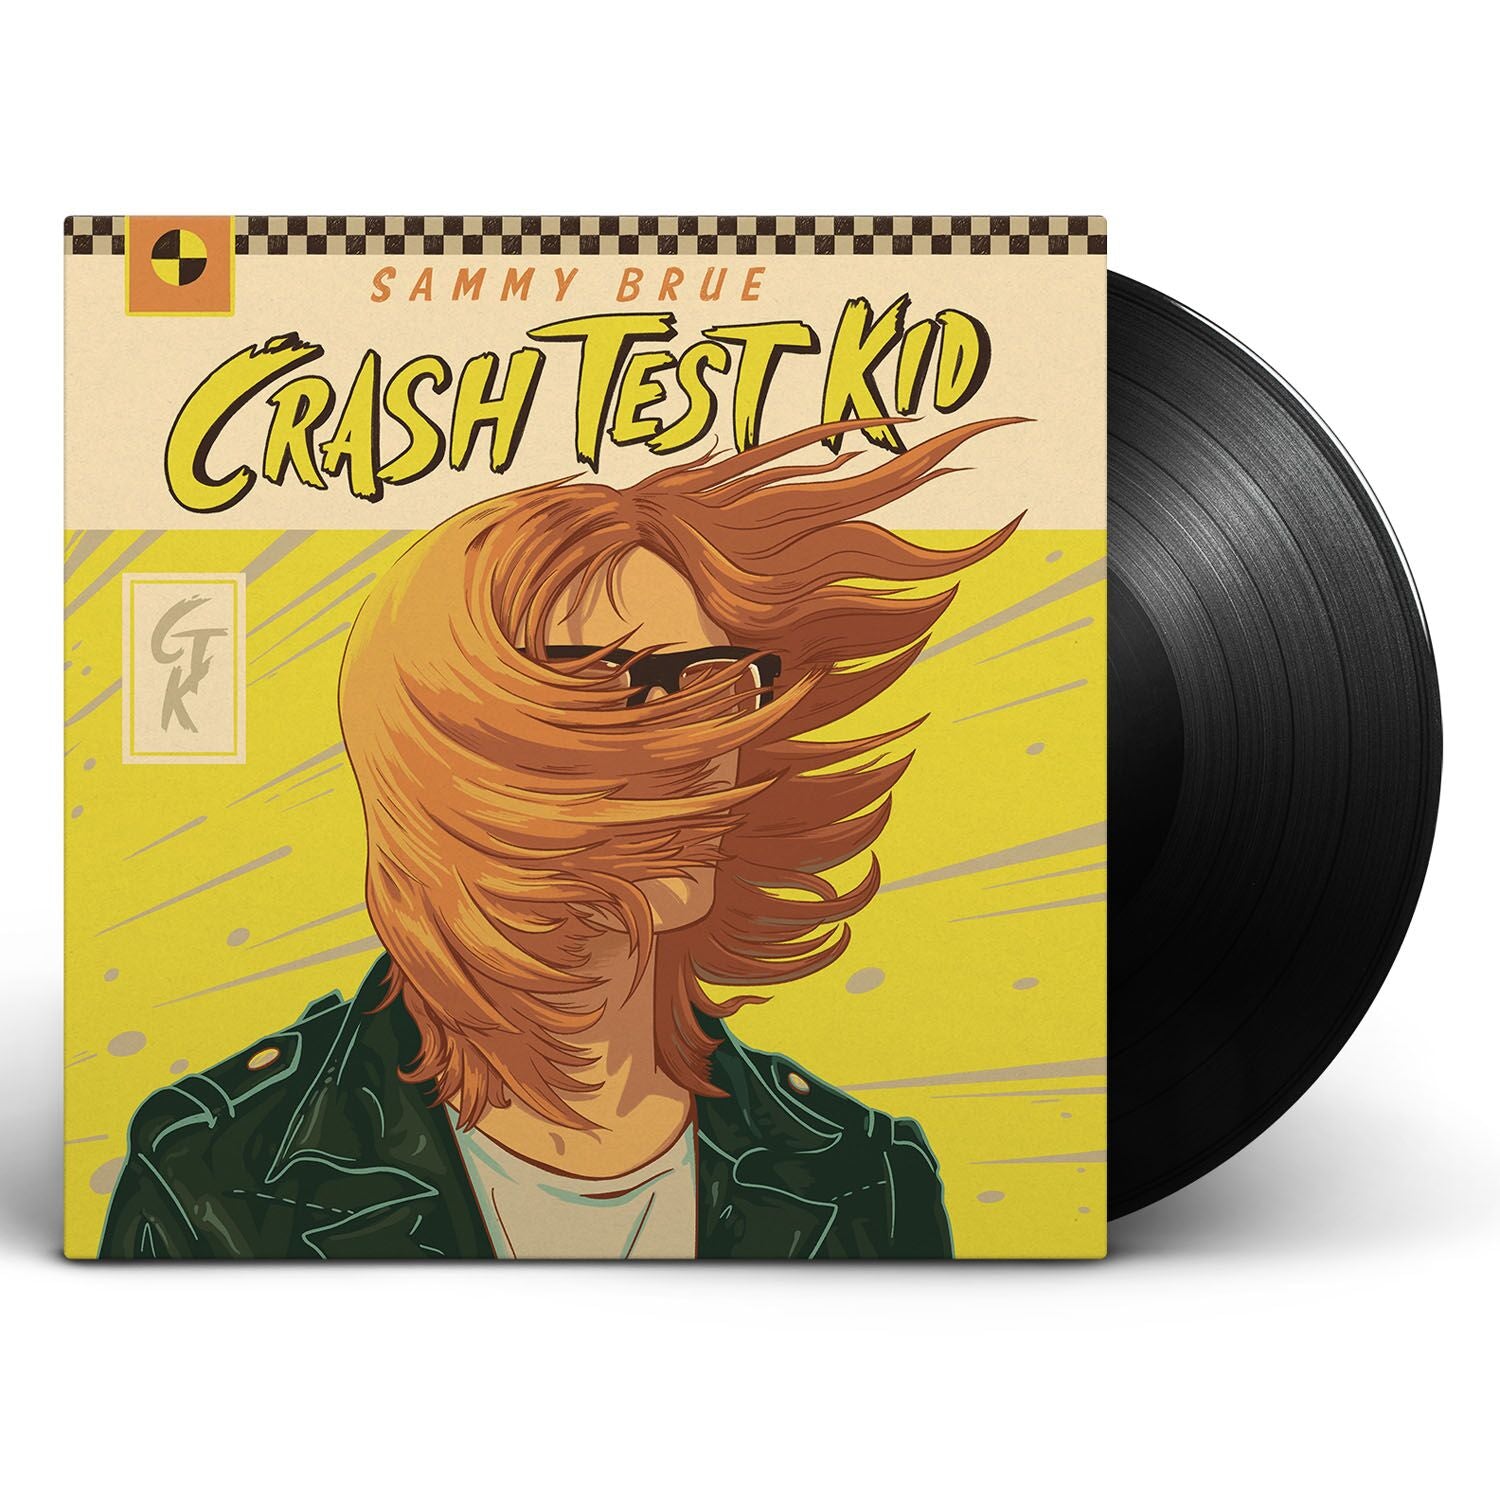 Sammy Brue - Crash Test Kid [Vinyl]